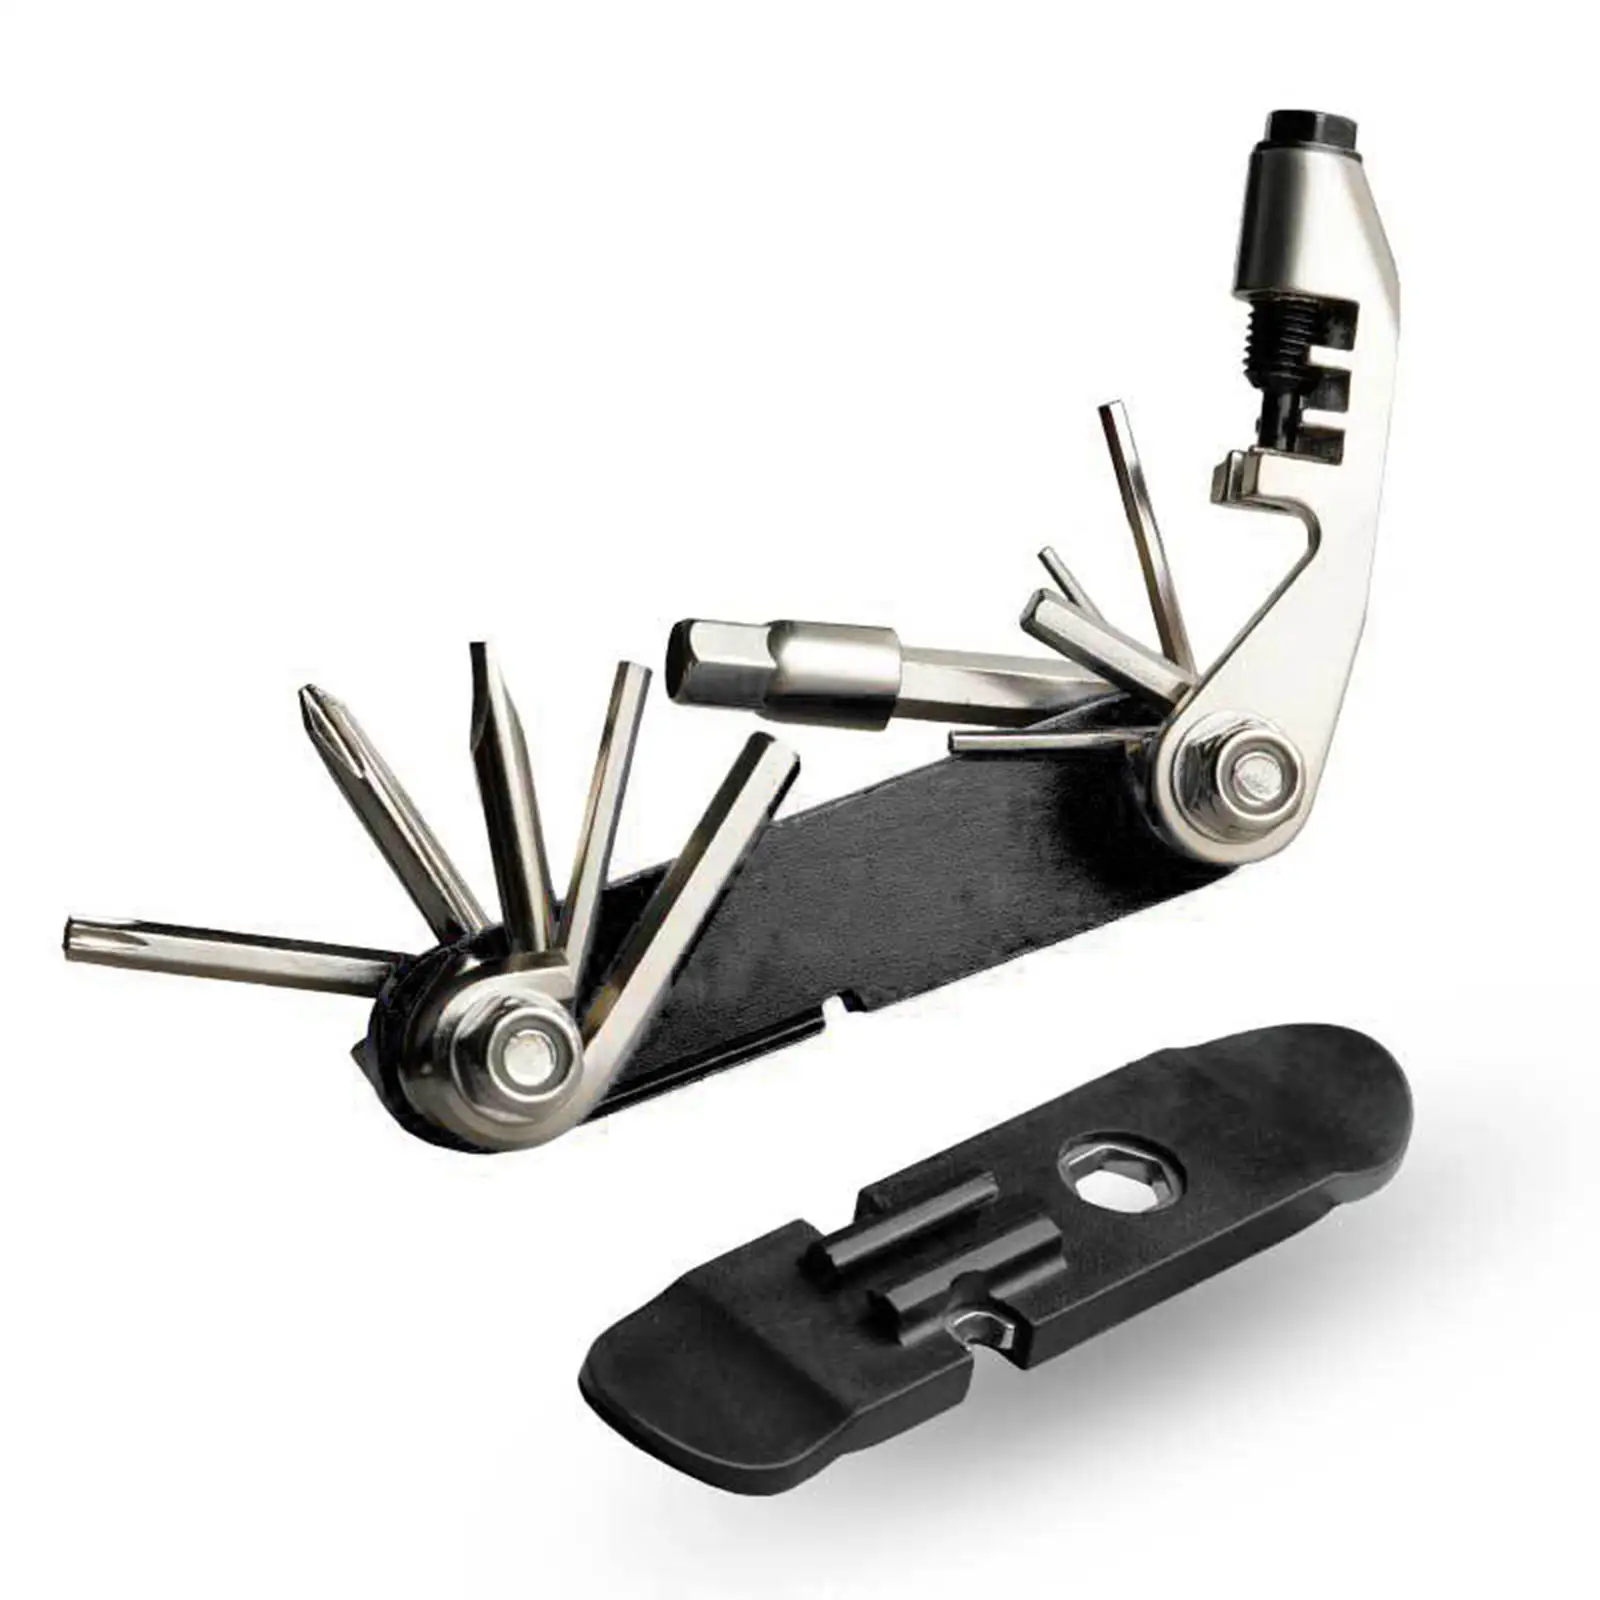 14 in 1 Bike Repair Tool Kit Multi Function Bicycle Spoke Wrench for Road Bike MTB